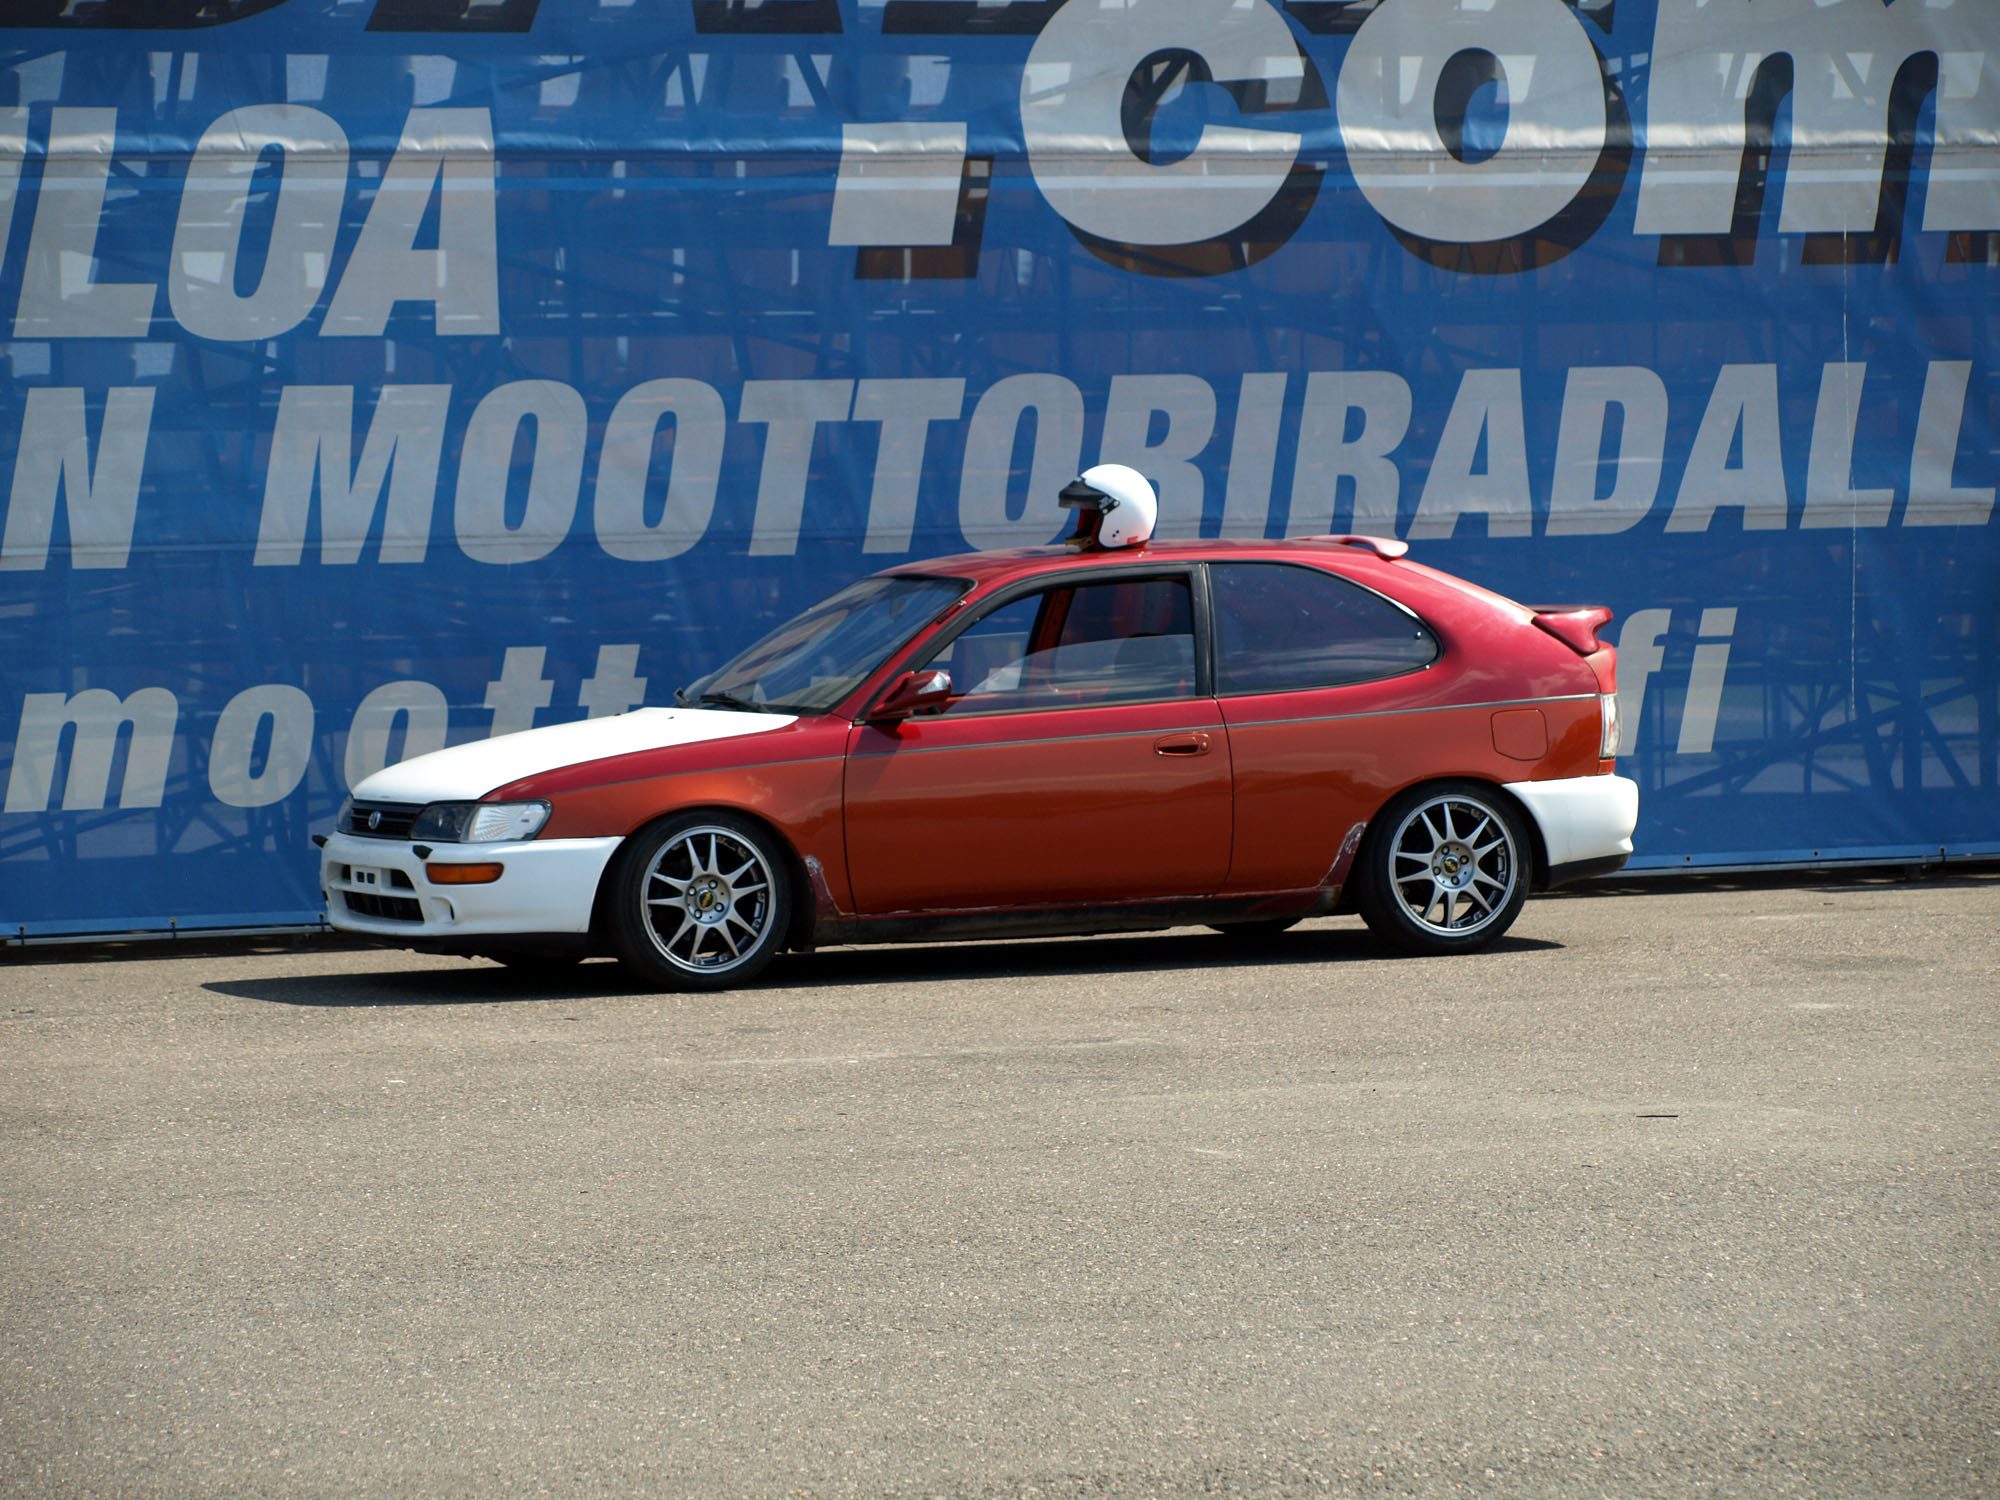 Fintoys ratapÃ¤ivÃ¤ 23.5.2014 Alastaro Circuit, Toyota Corolla